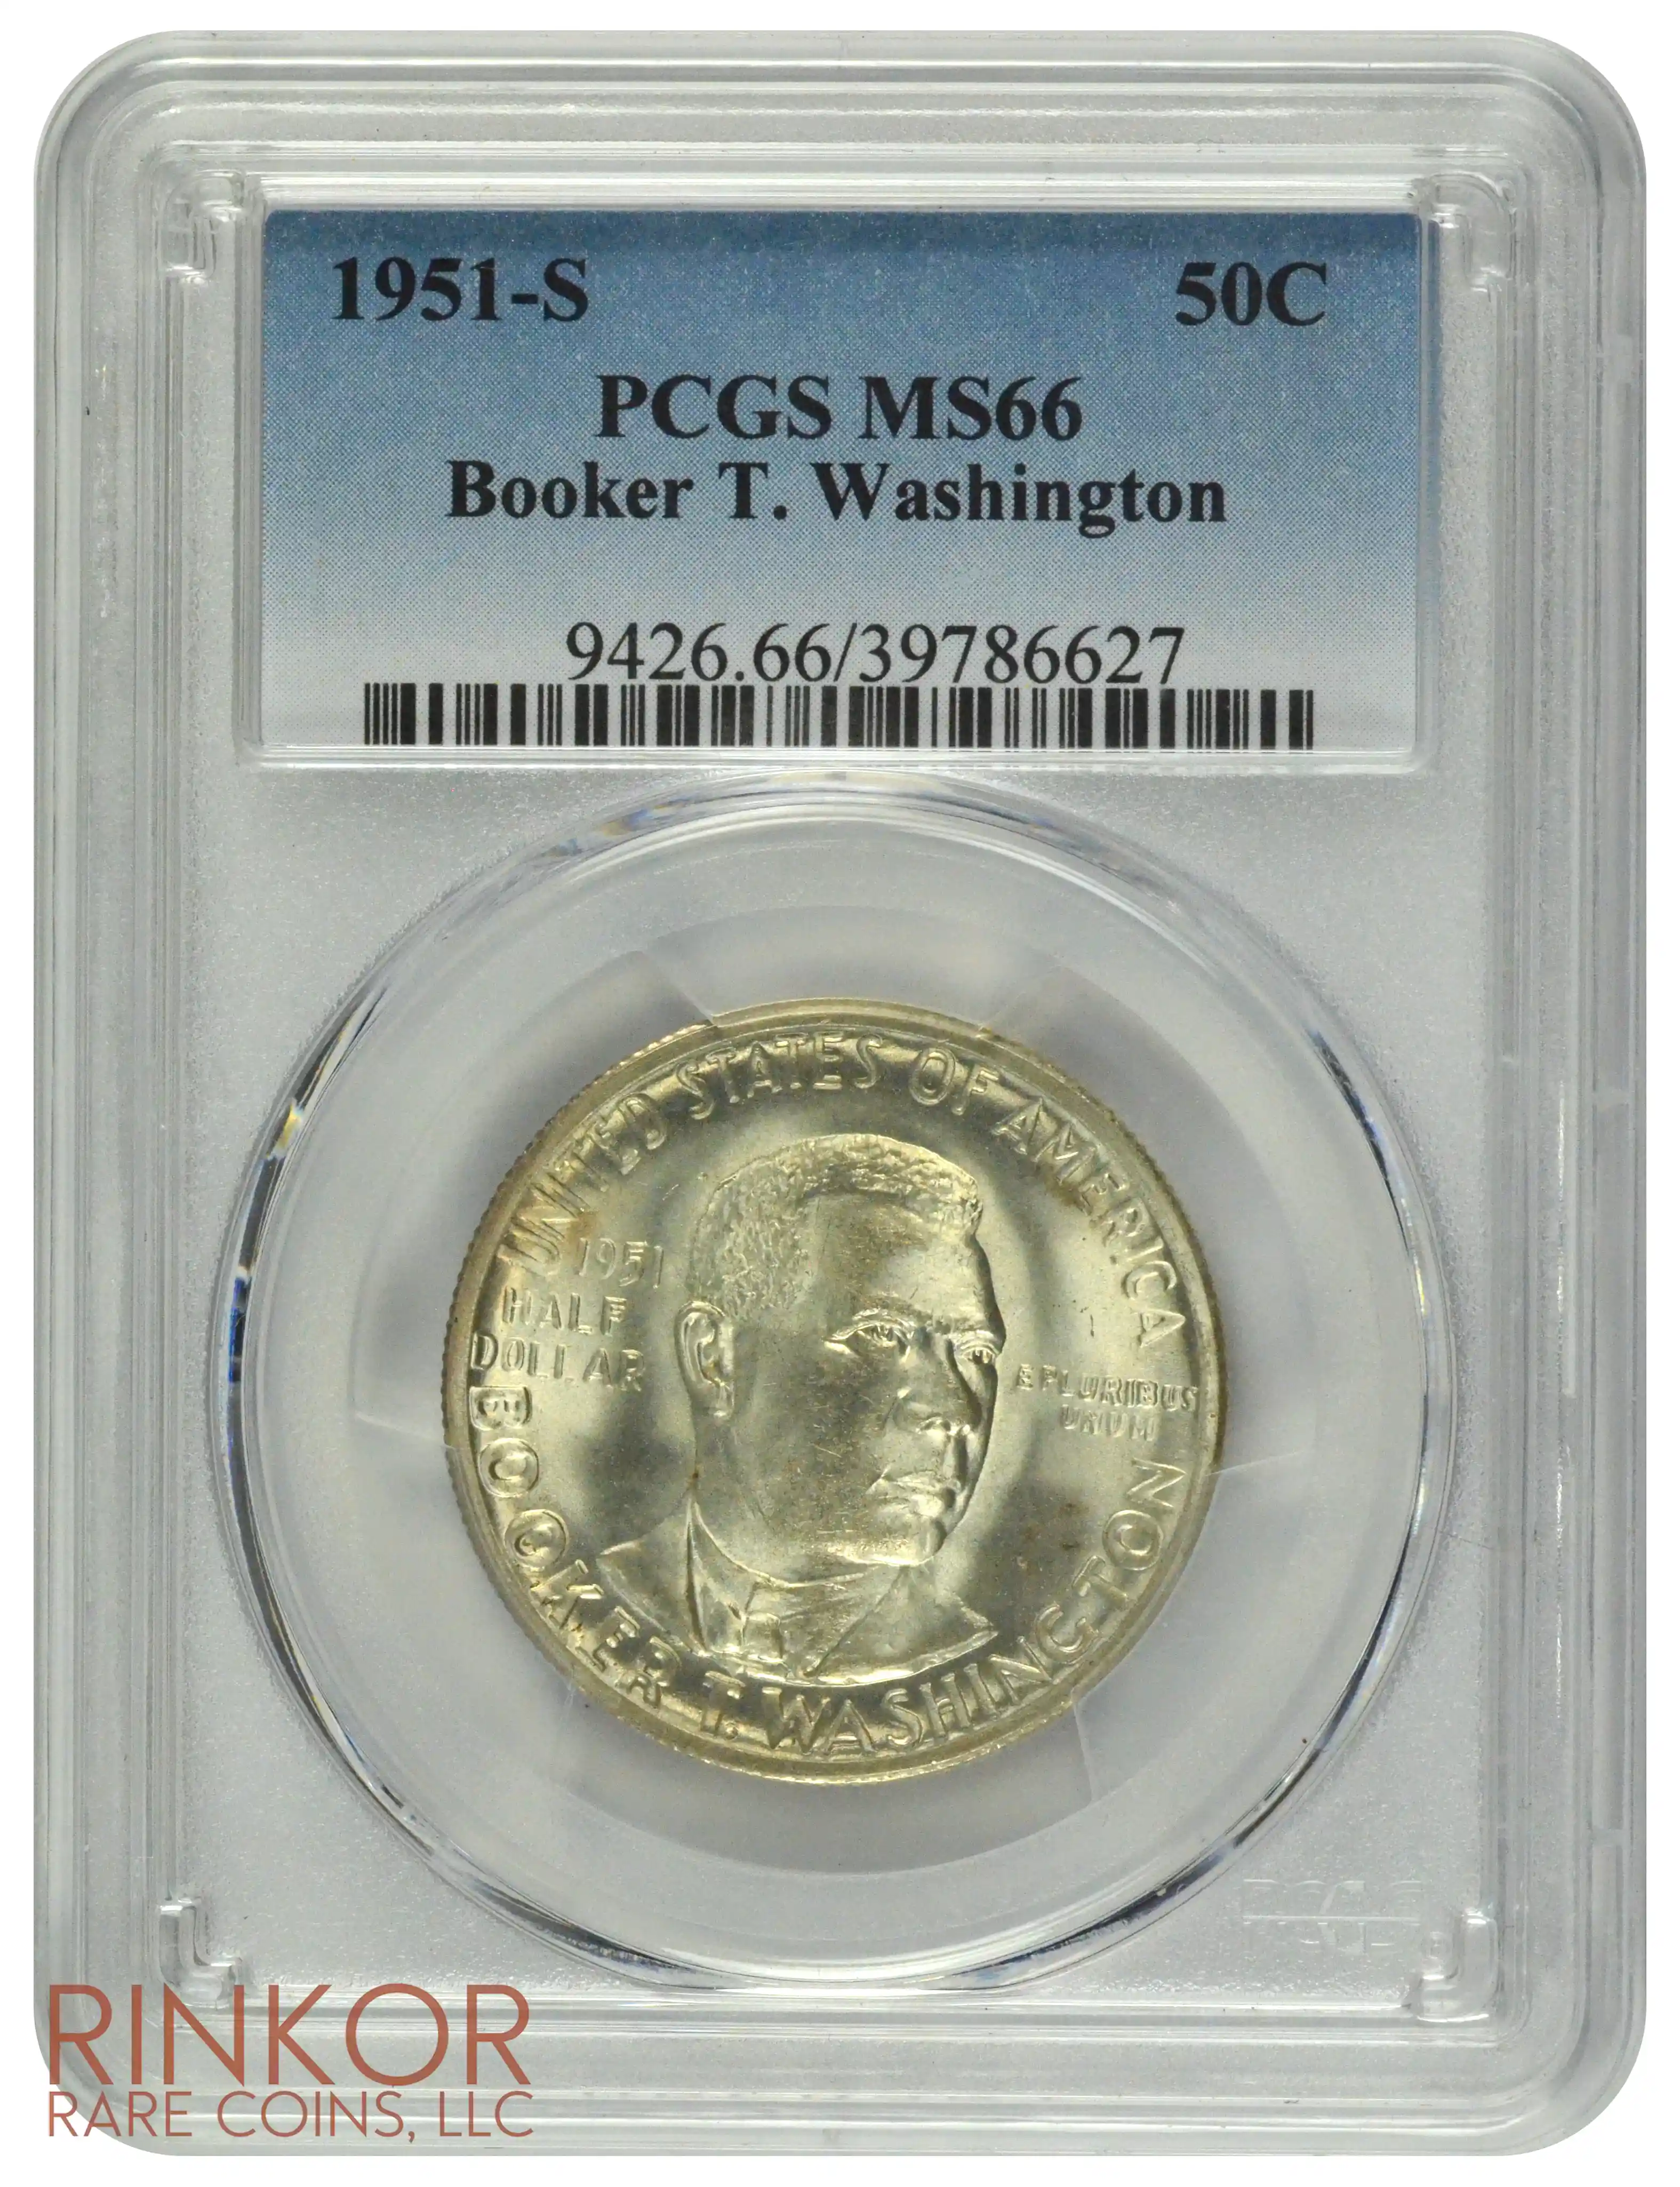 1951-S Booker T. Washington Commemorative Half Dollar PCGS MS 66